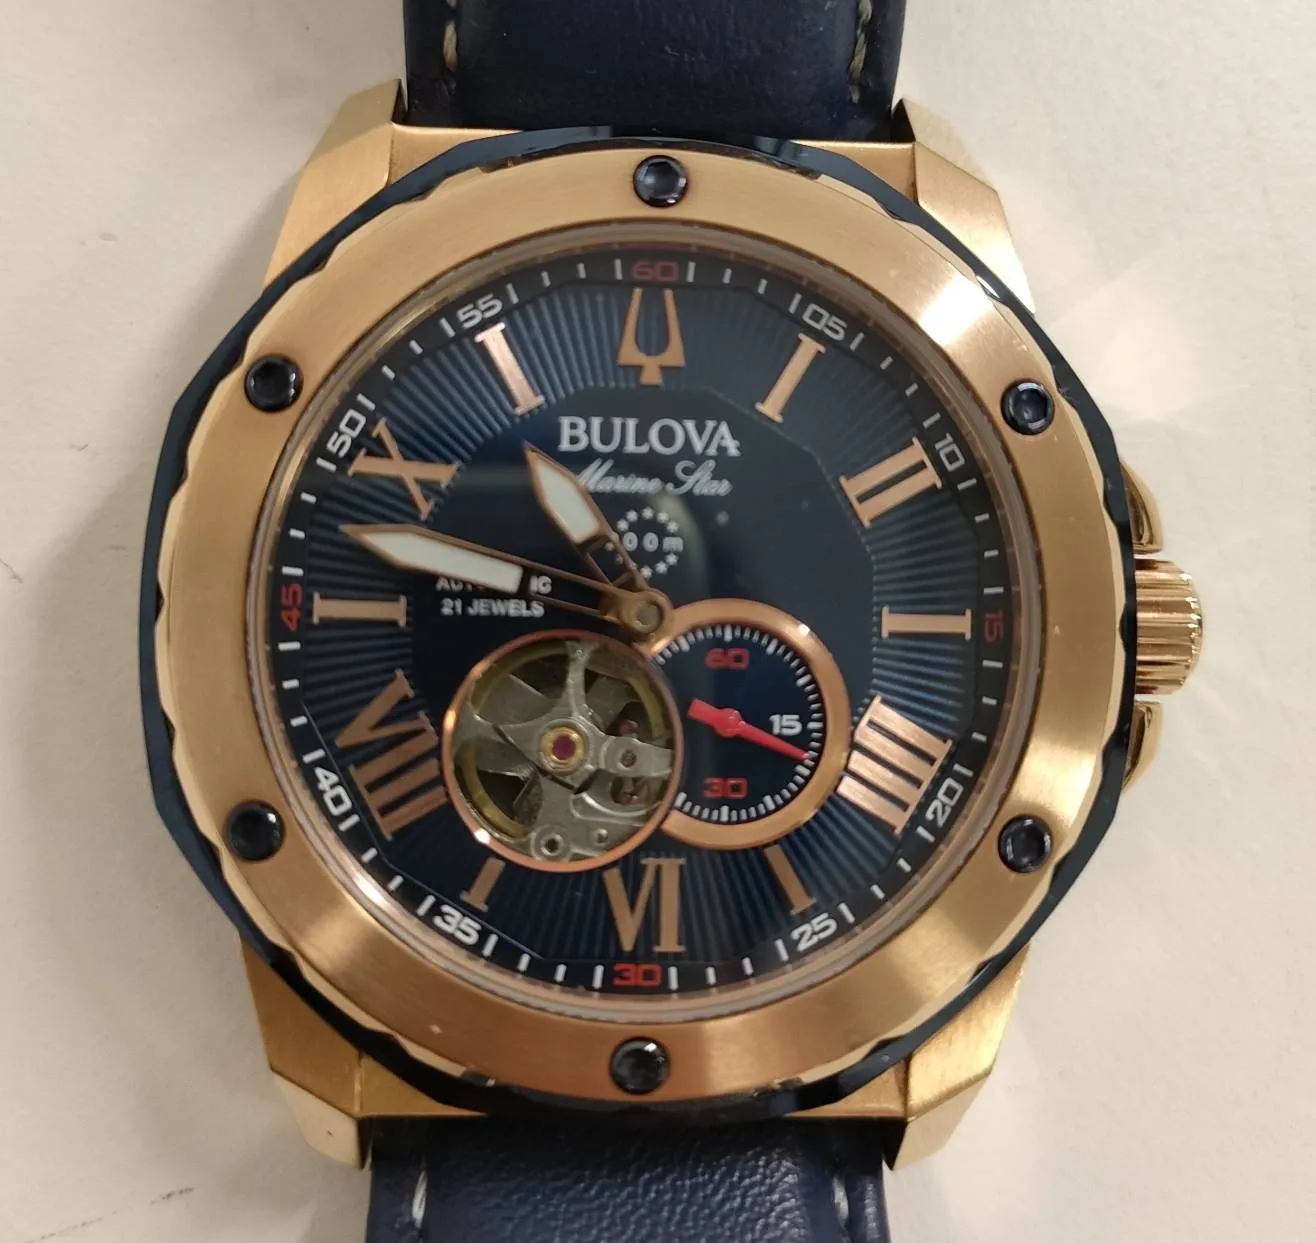 BULOVAの腕時計をお買取させていただきました！